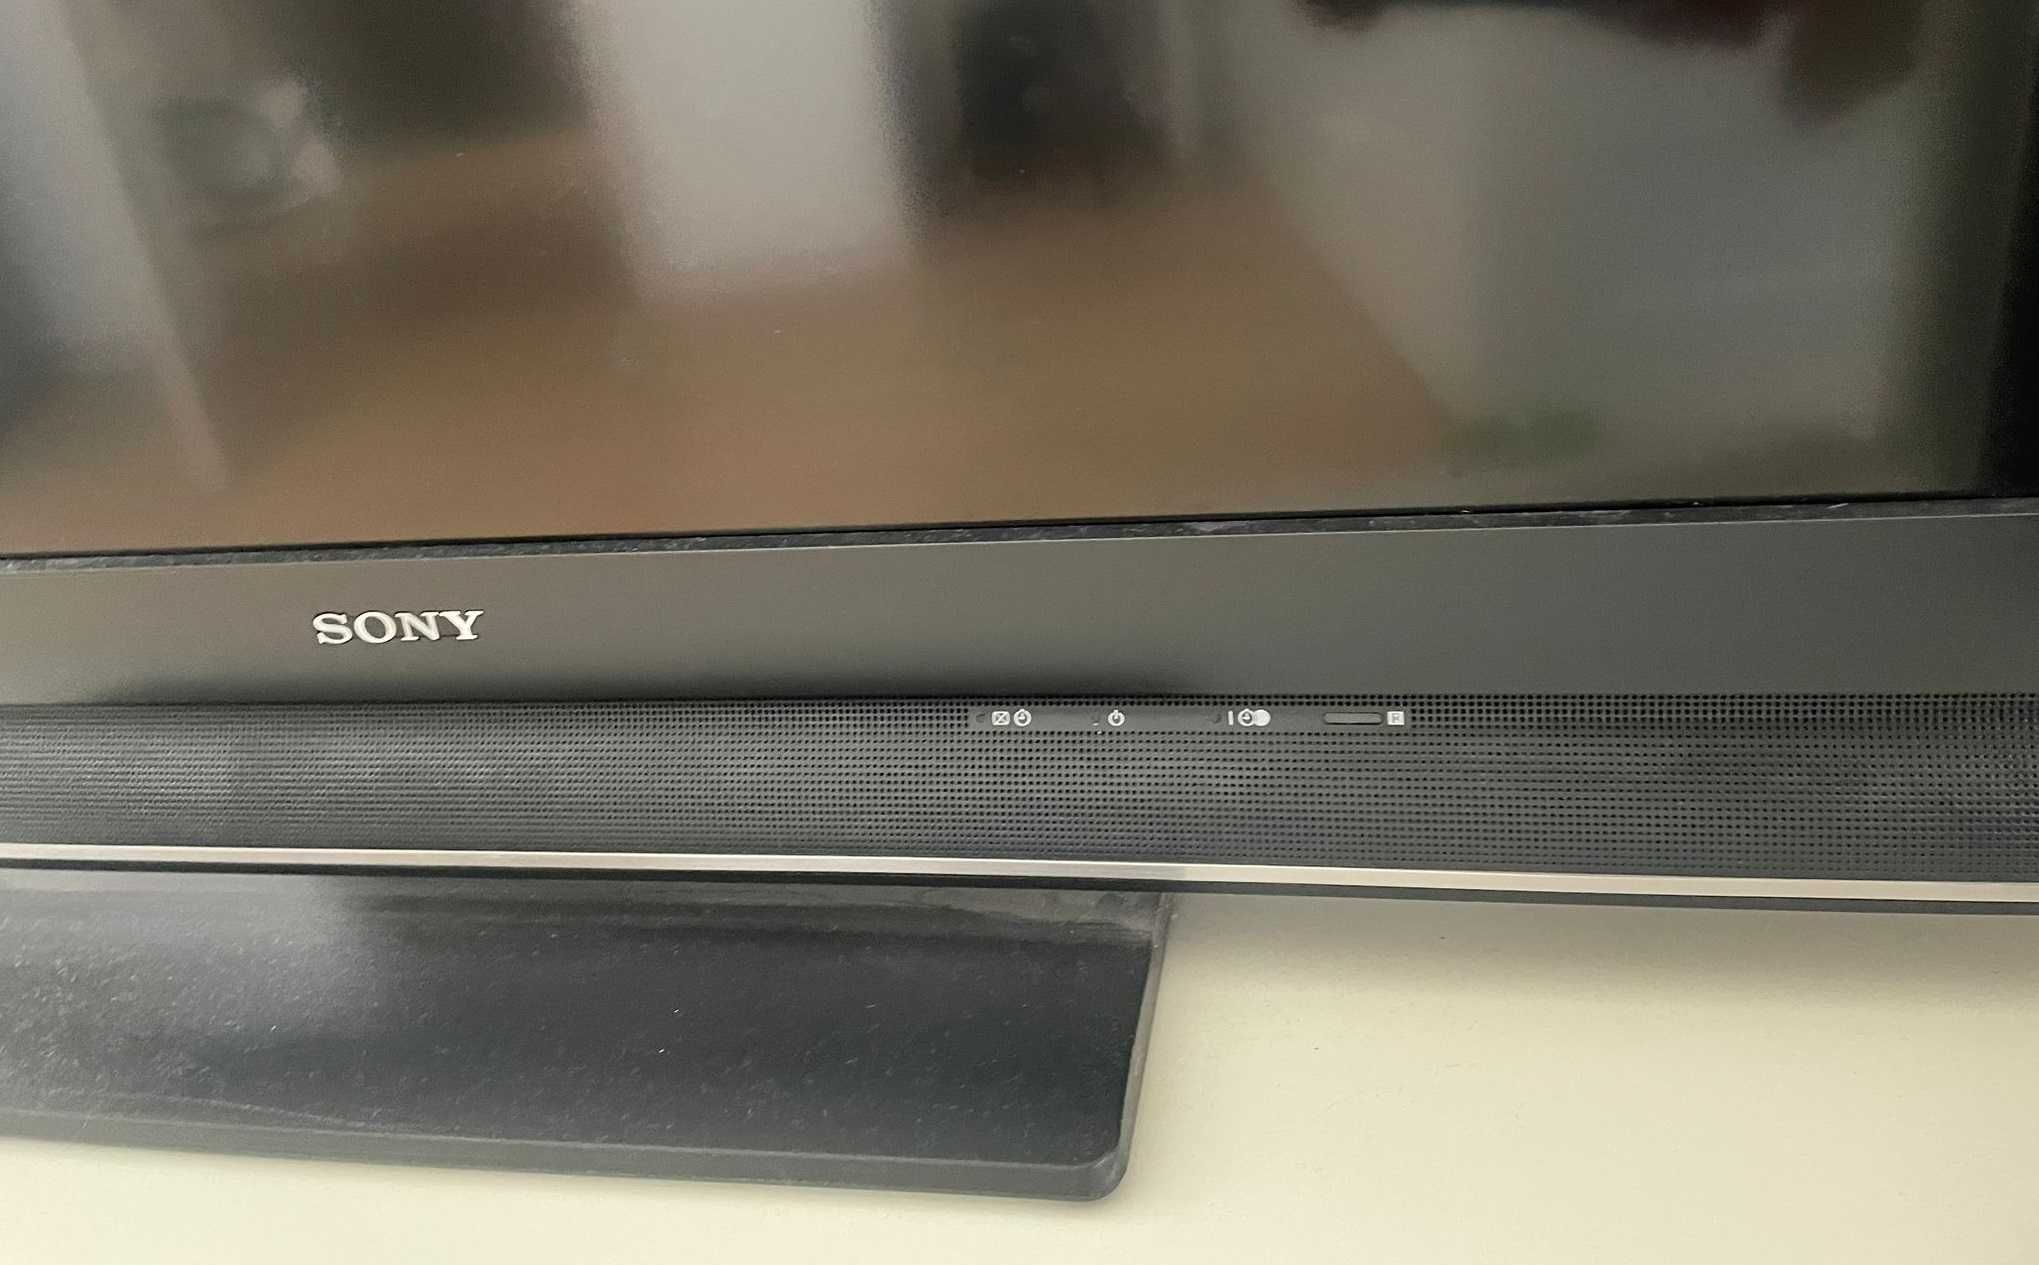 Sony Bravia KDL-40L4000